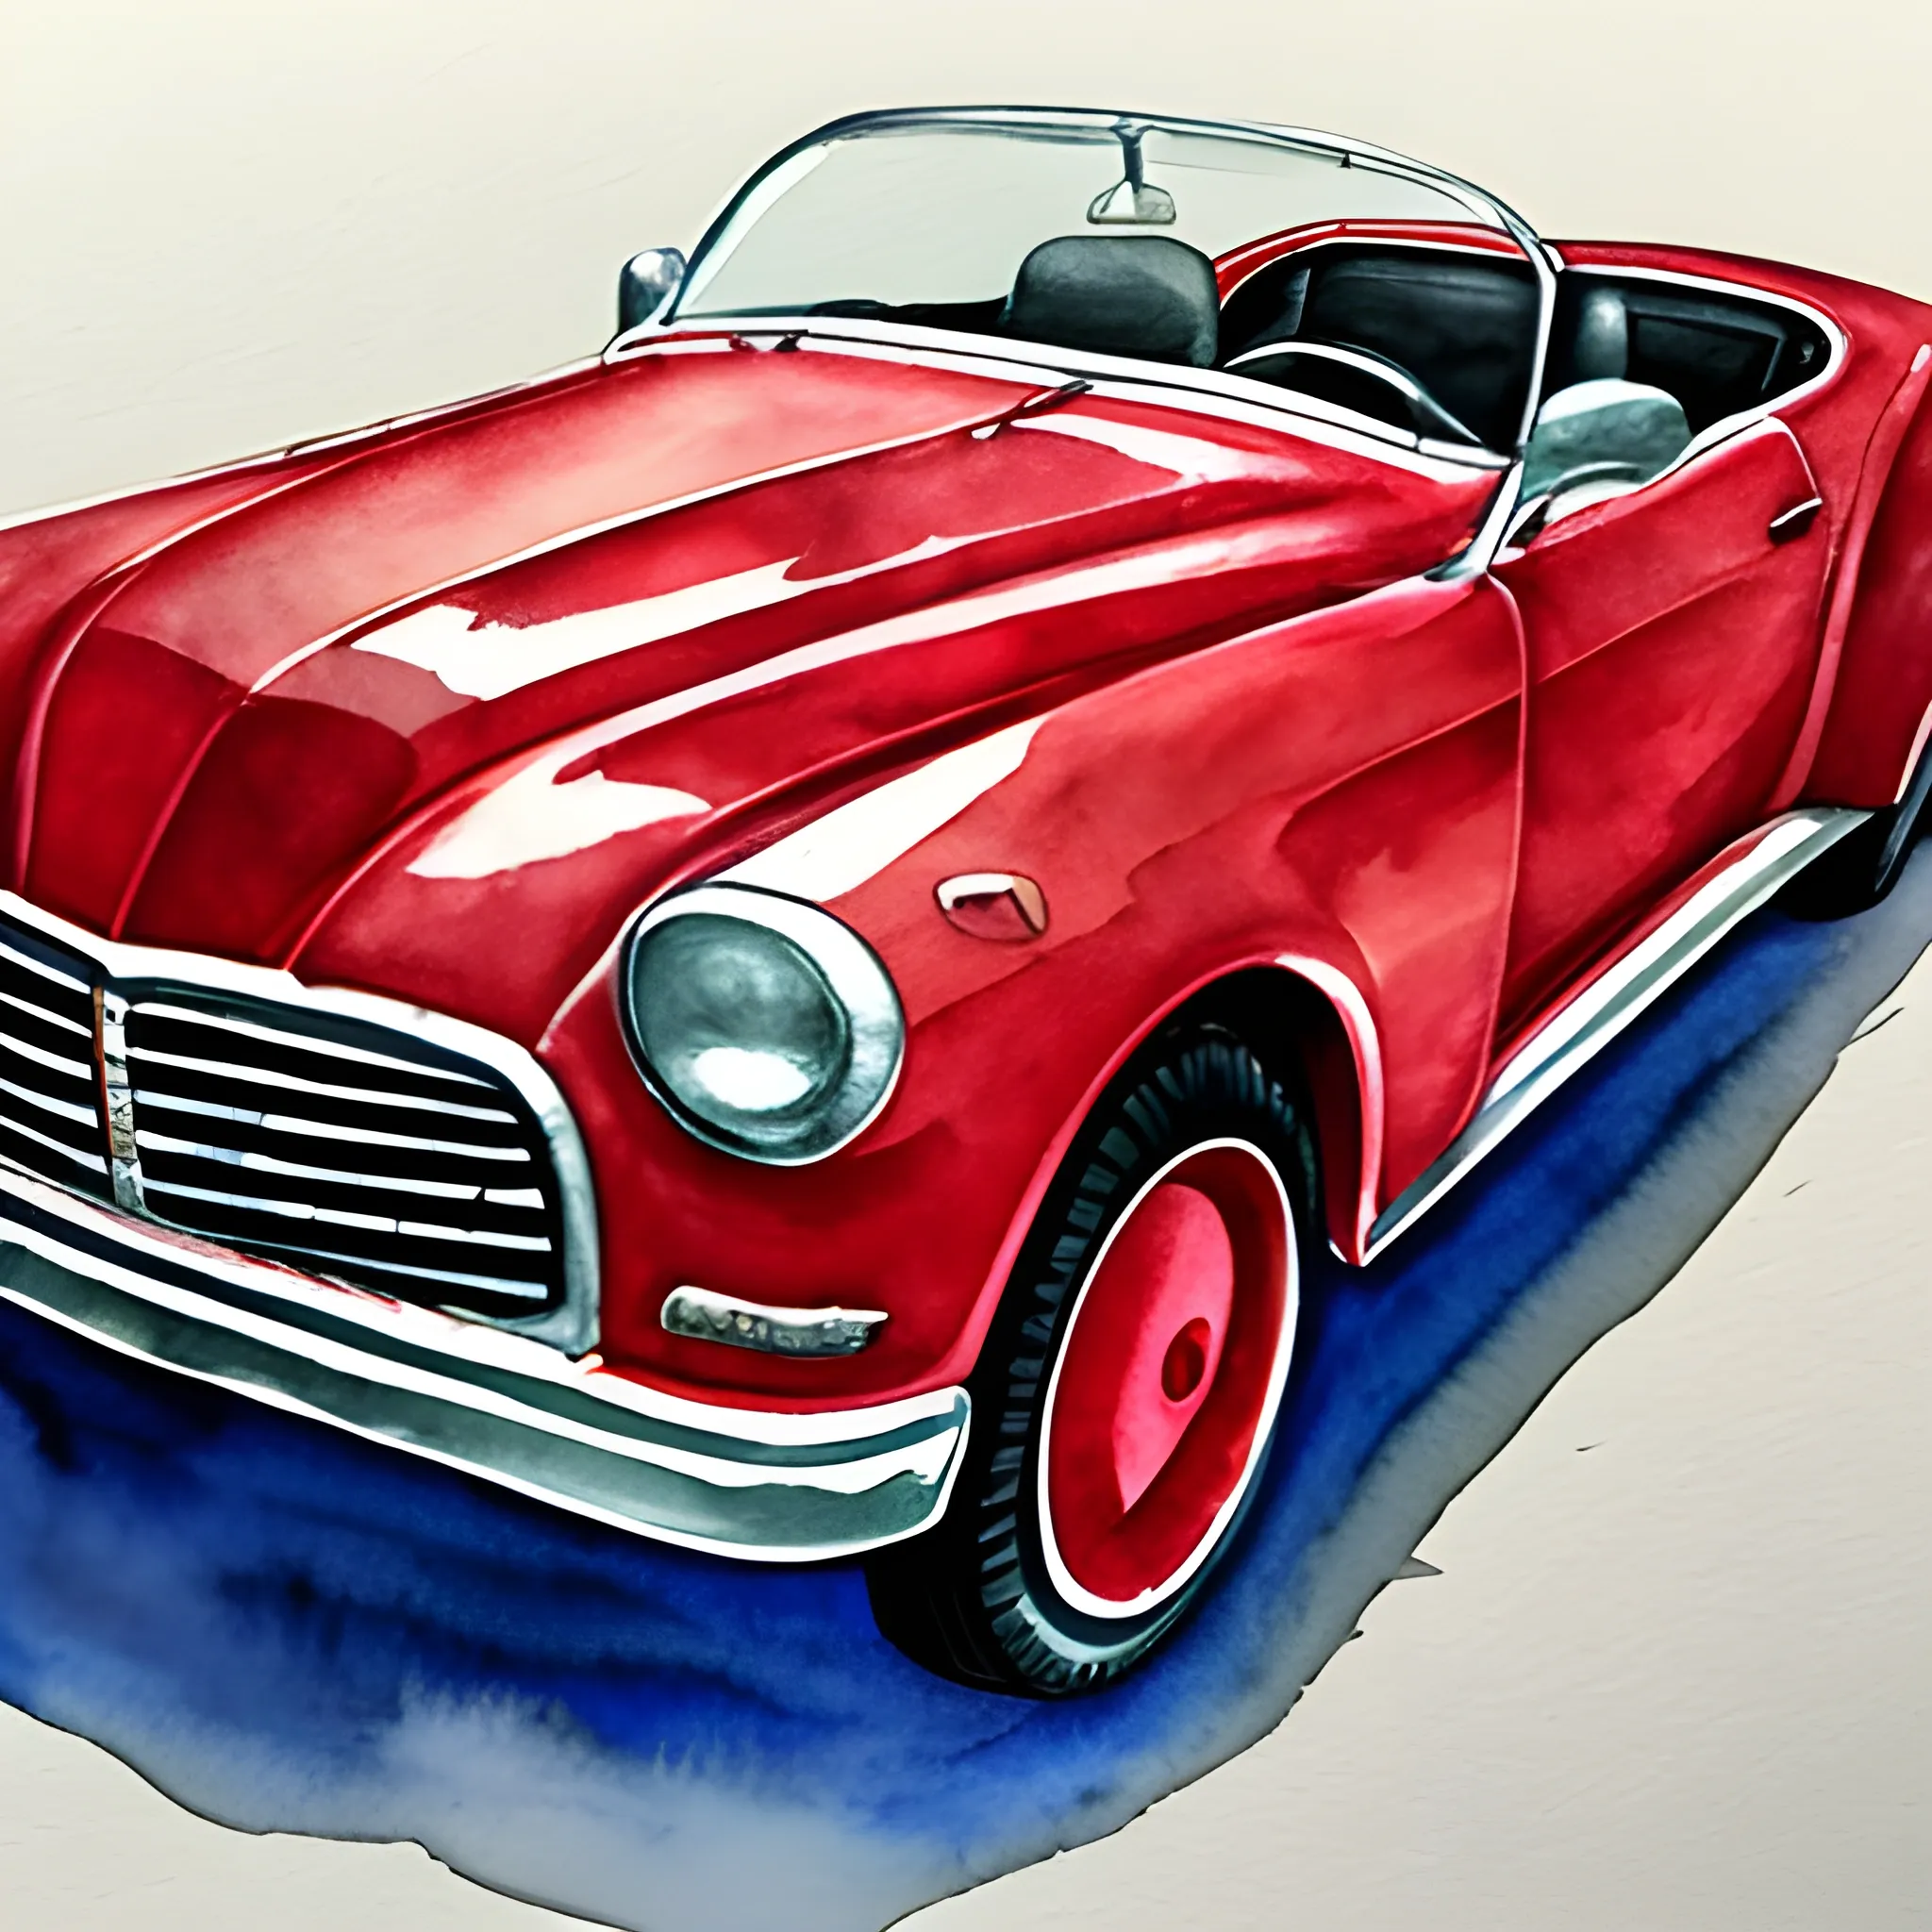 Coloring page - Carro do vintage